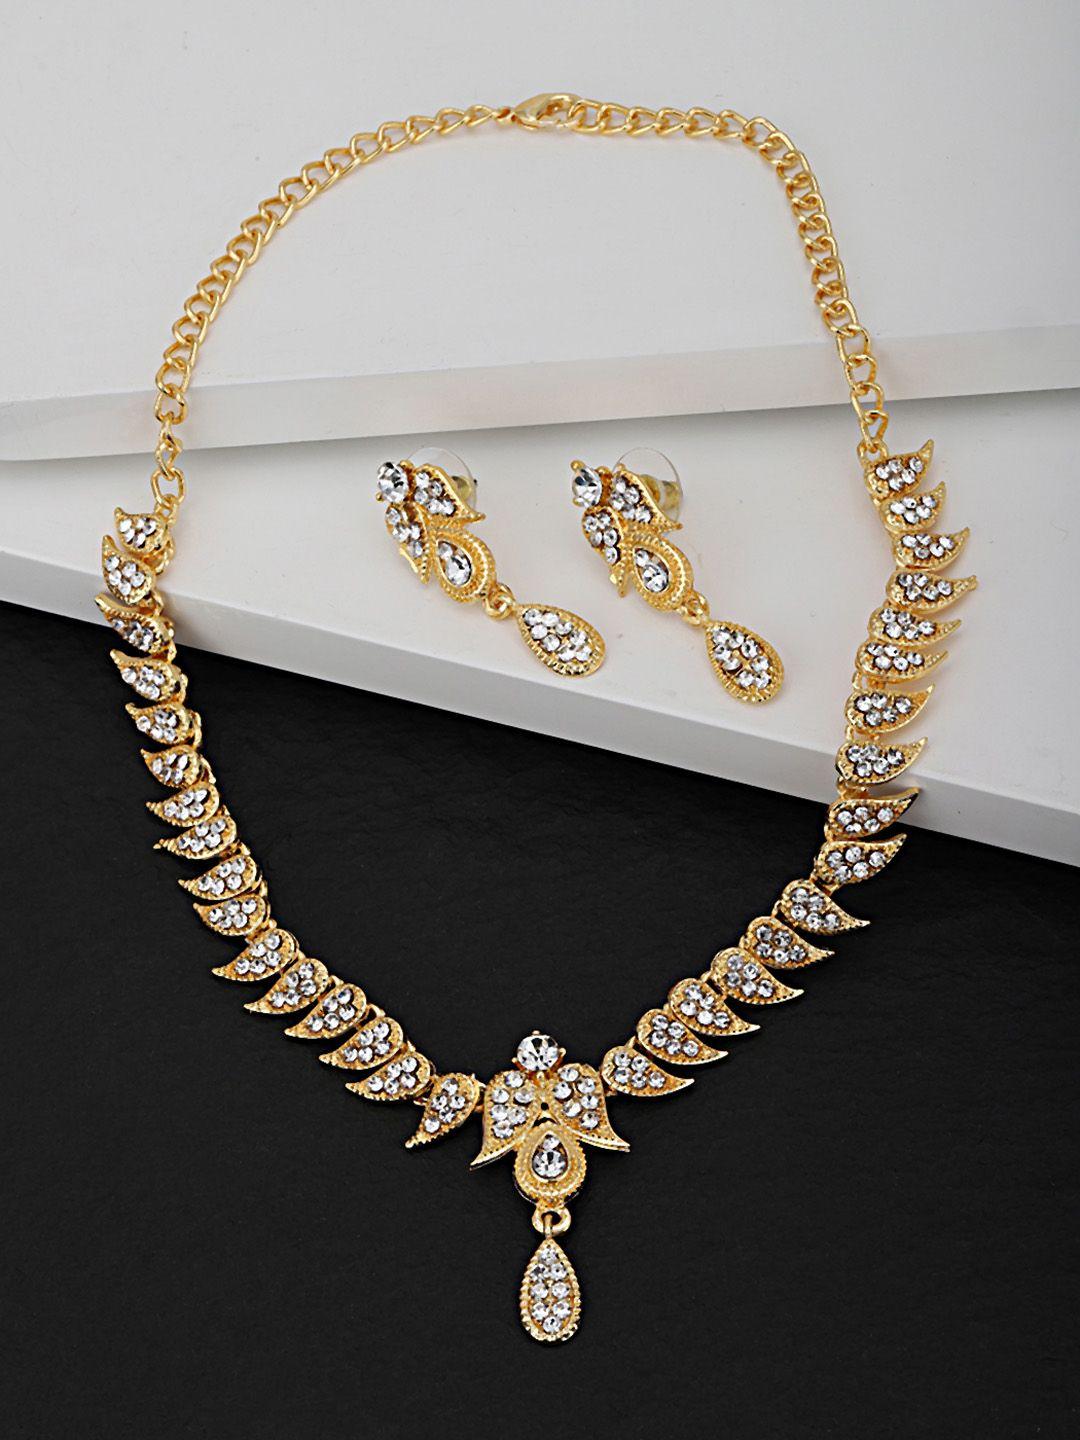 carlton london gold-toned american diamond-studded jewellery set